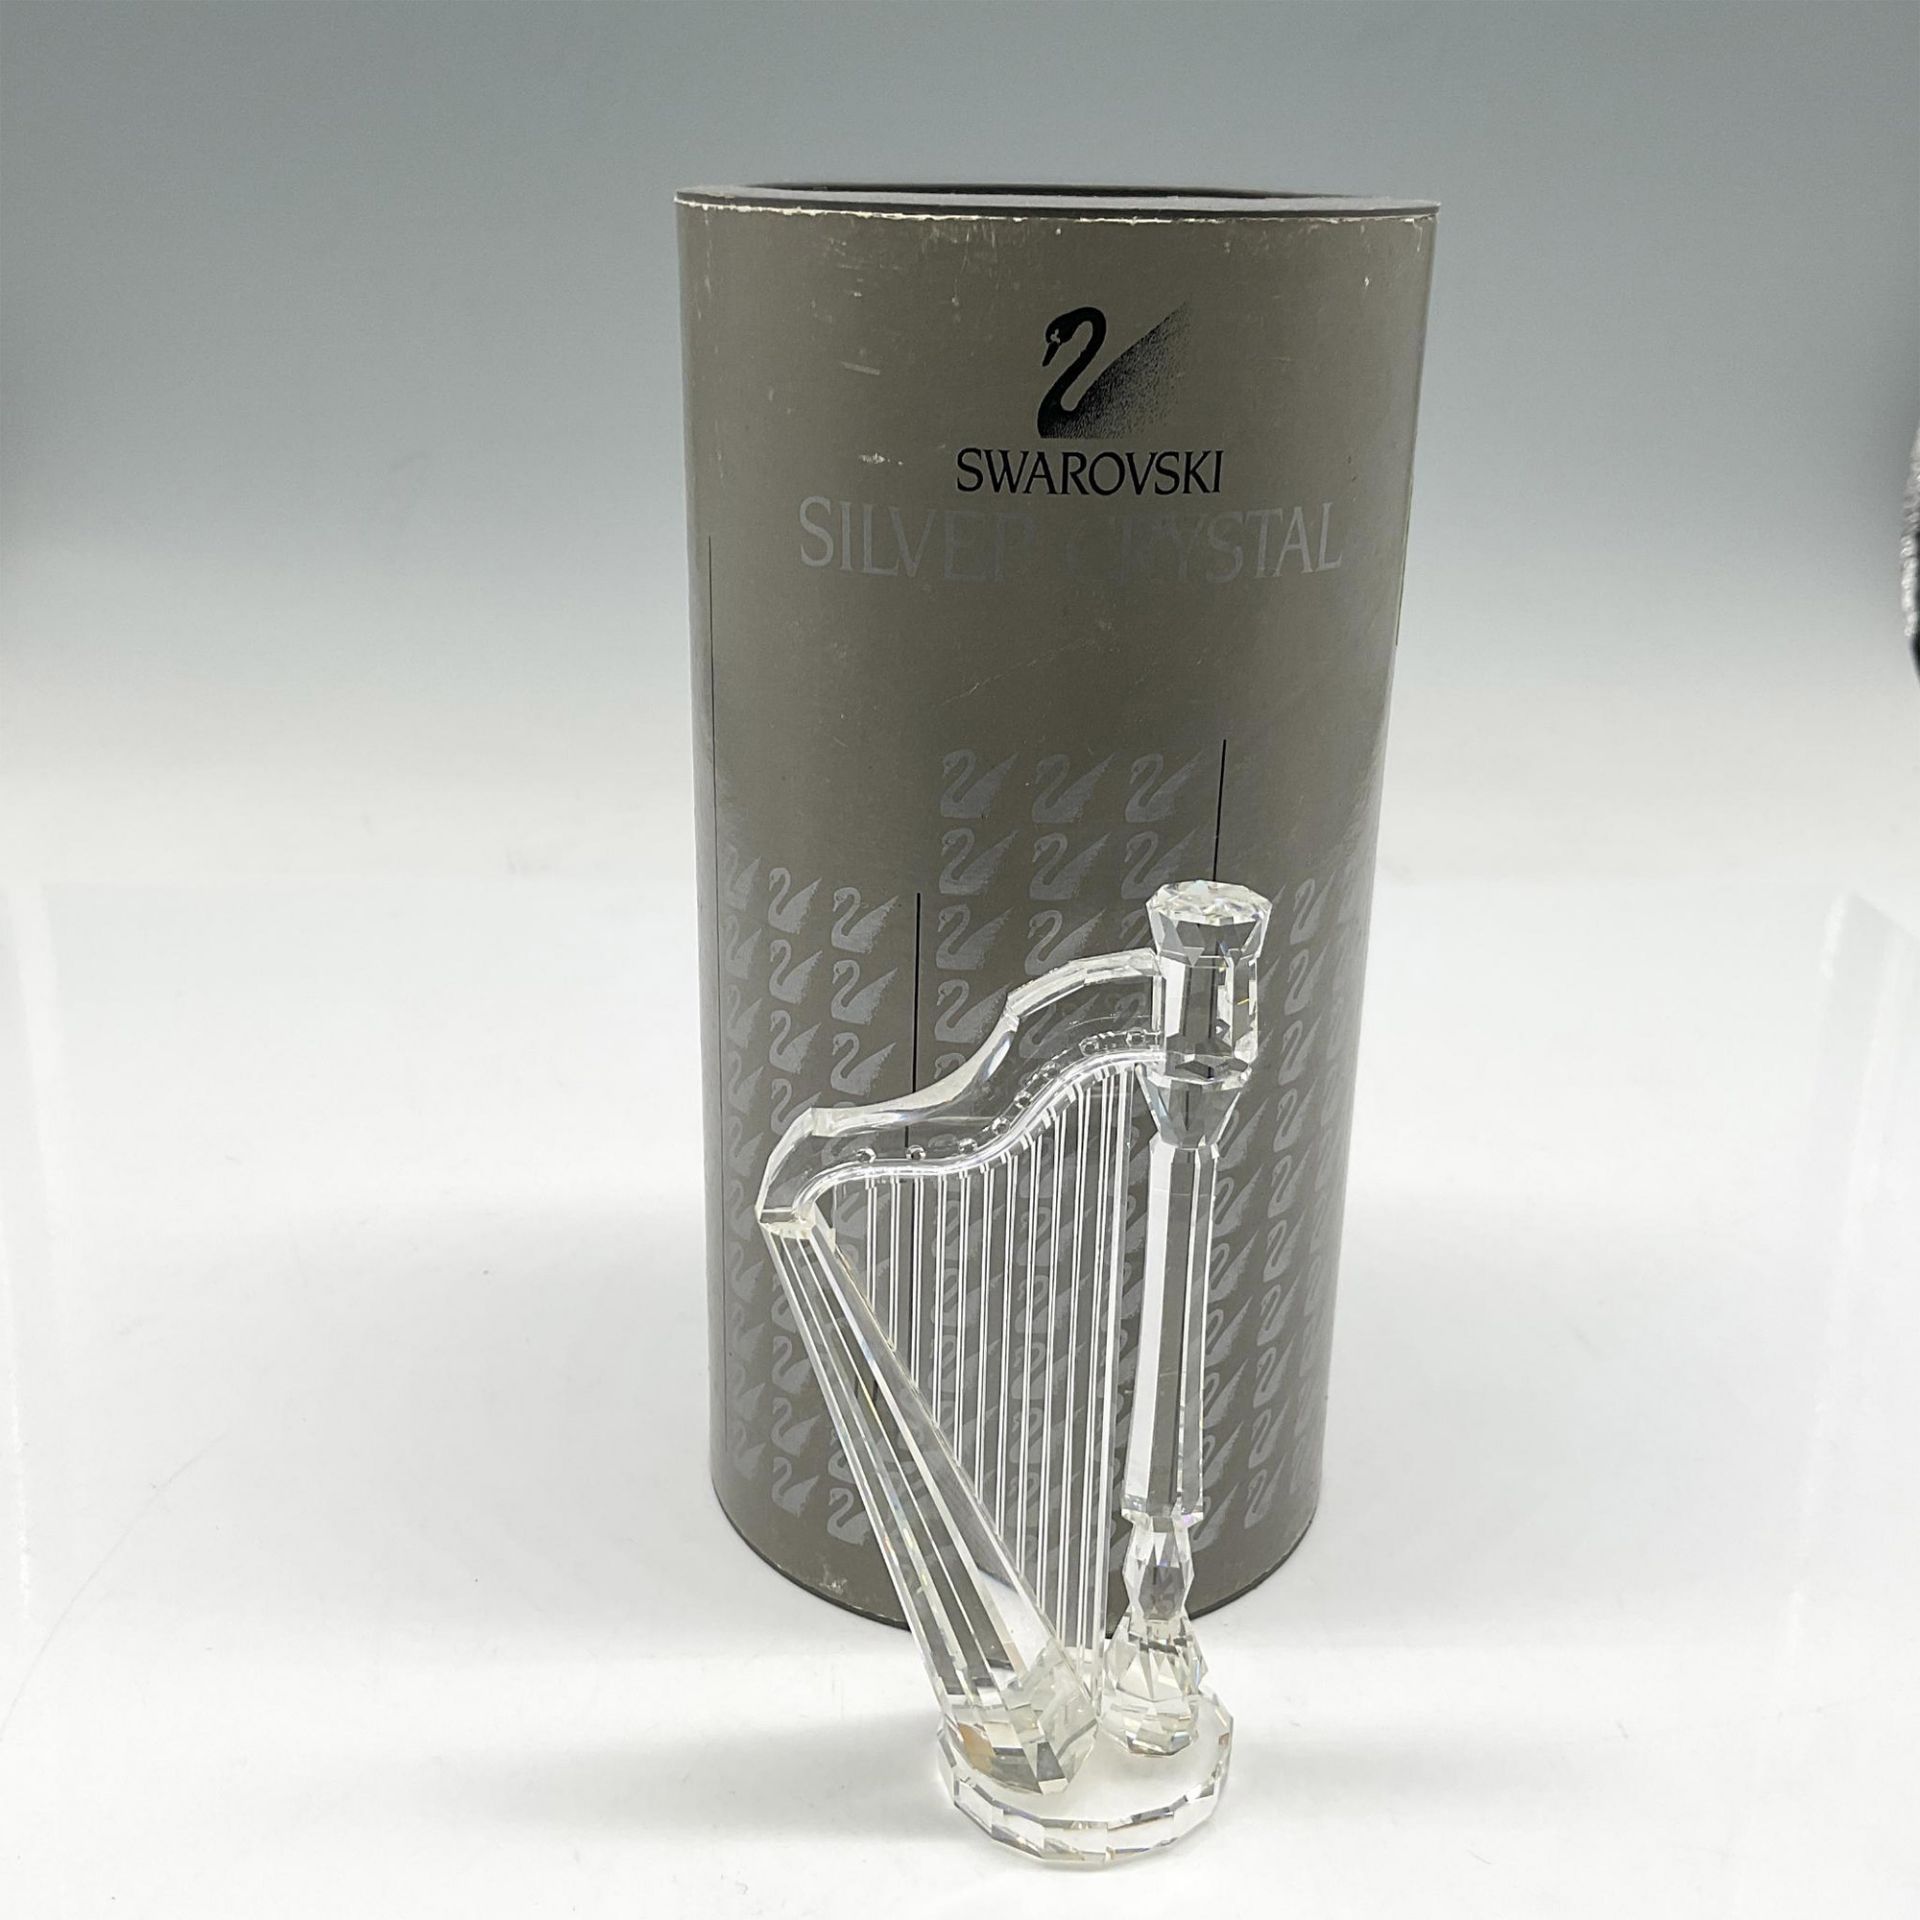 Swarovski Silver Crystal Figurine, Harp - Image 4 of 4